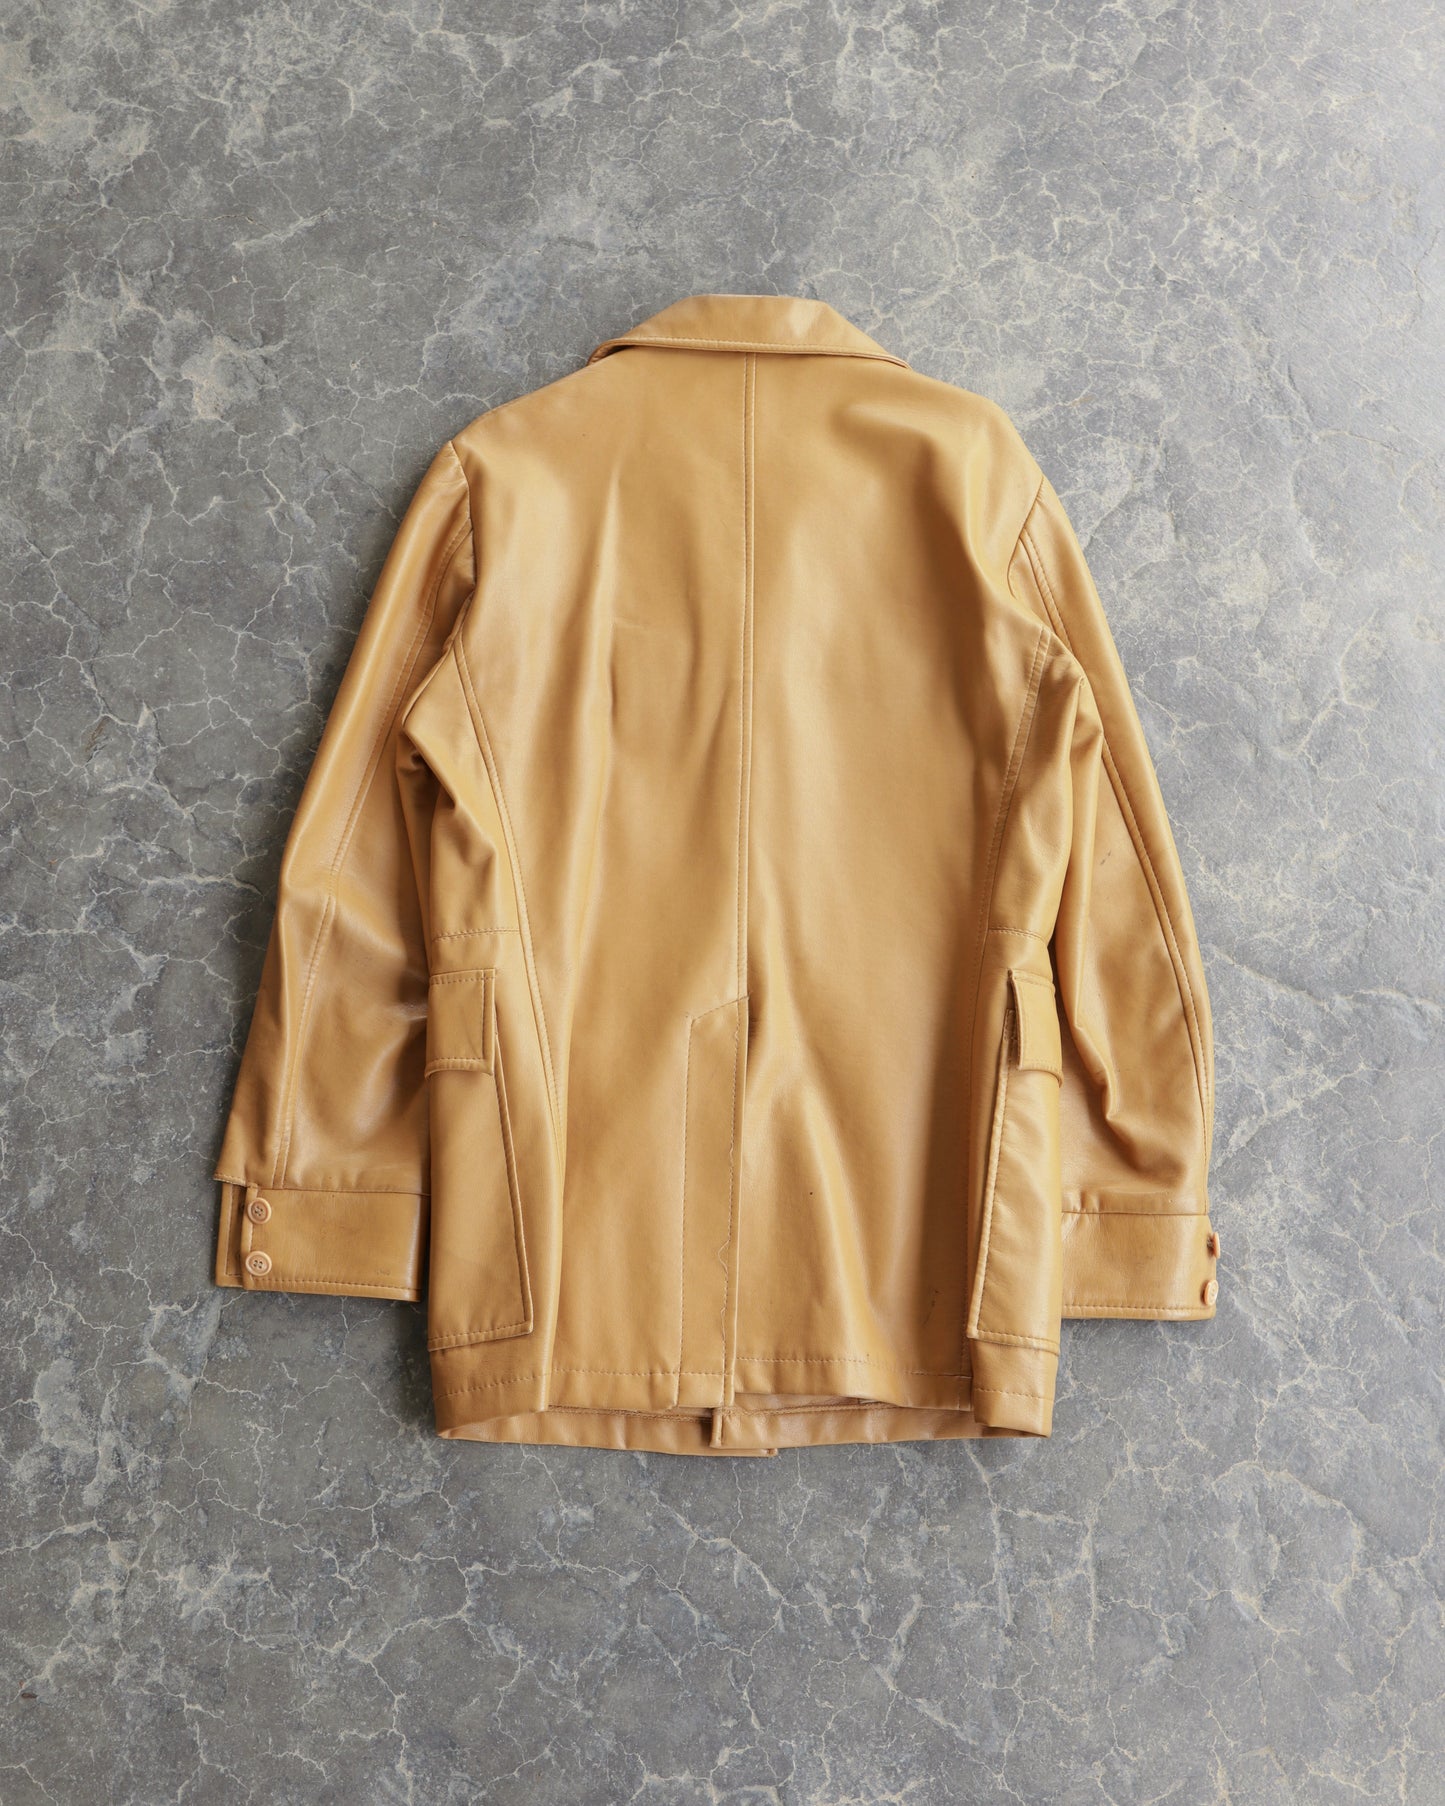 80s Ventura Hide Trench Leather Jacket - Women’s S